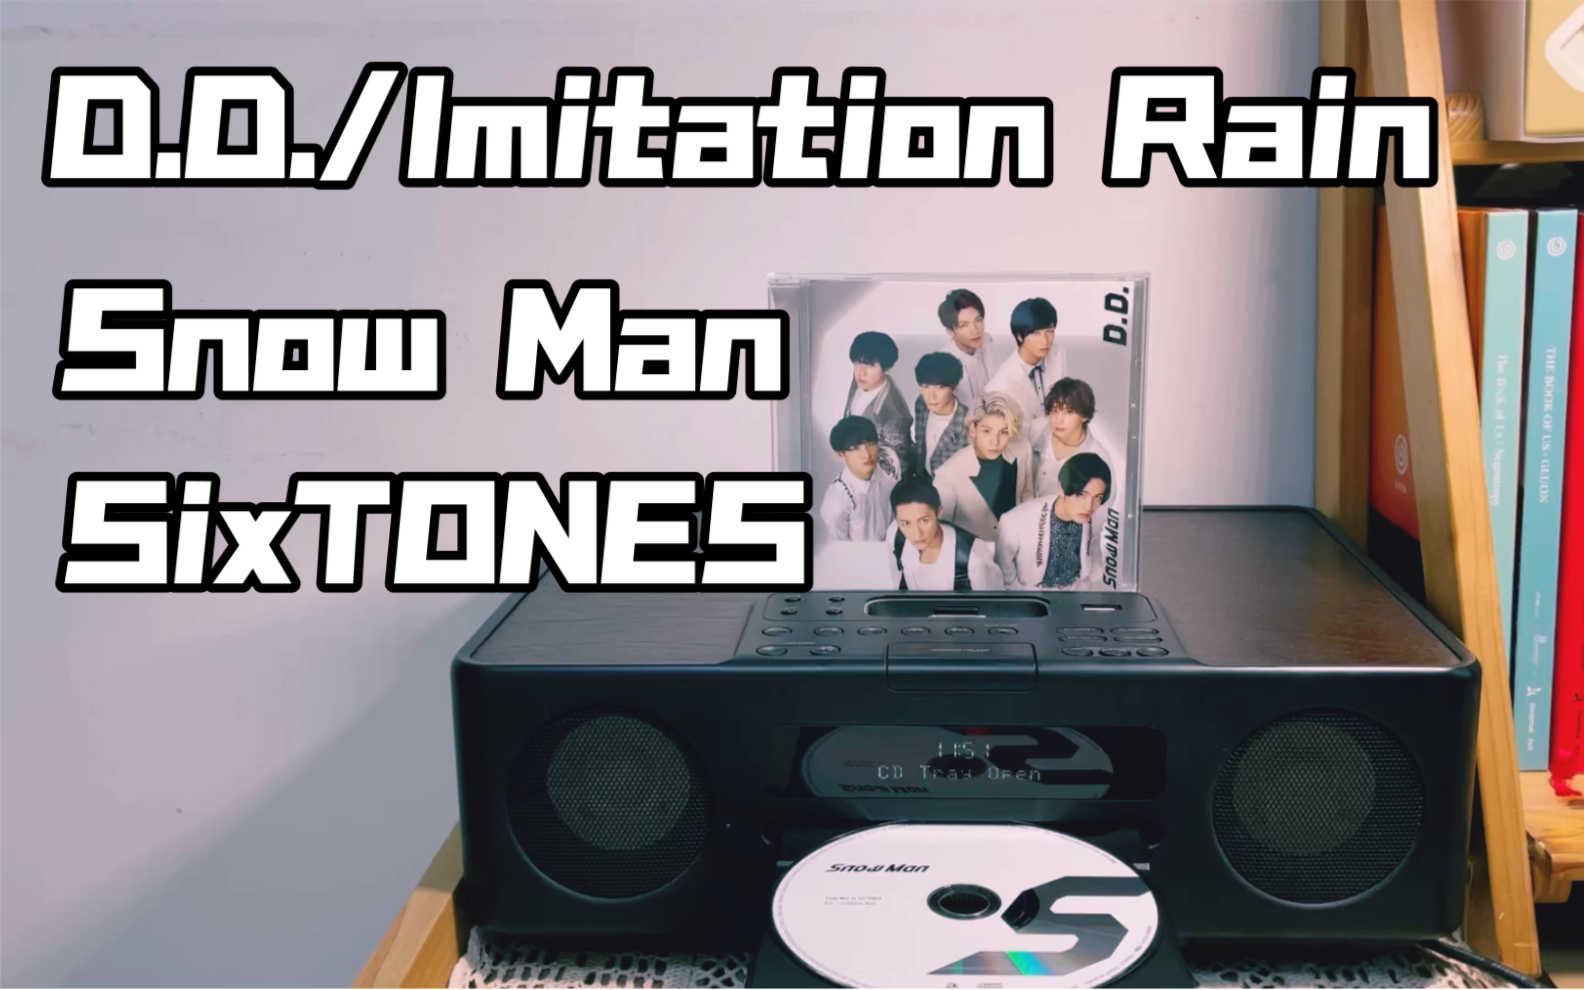 CD试听｜D.D./Imitation Rain雪筒出道单一单Snow Man/SixTONES 1st EP 